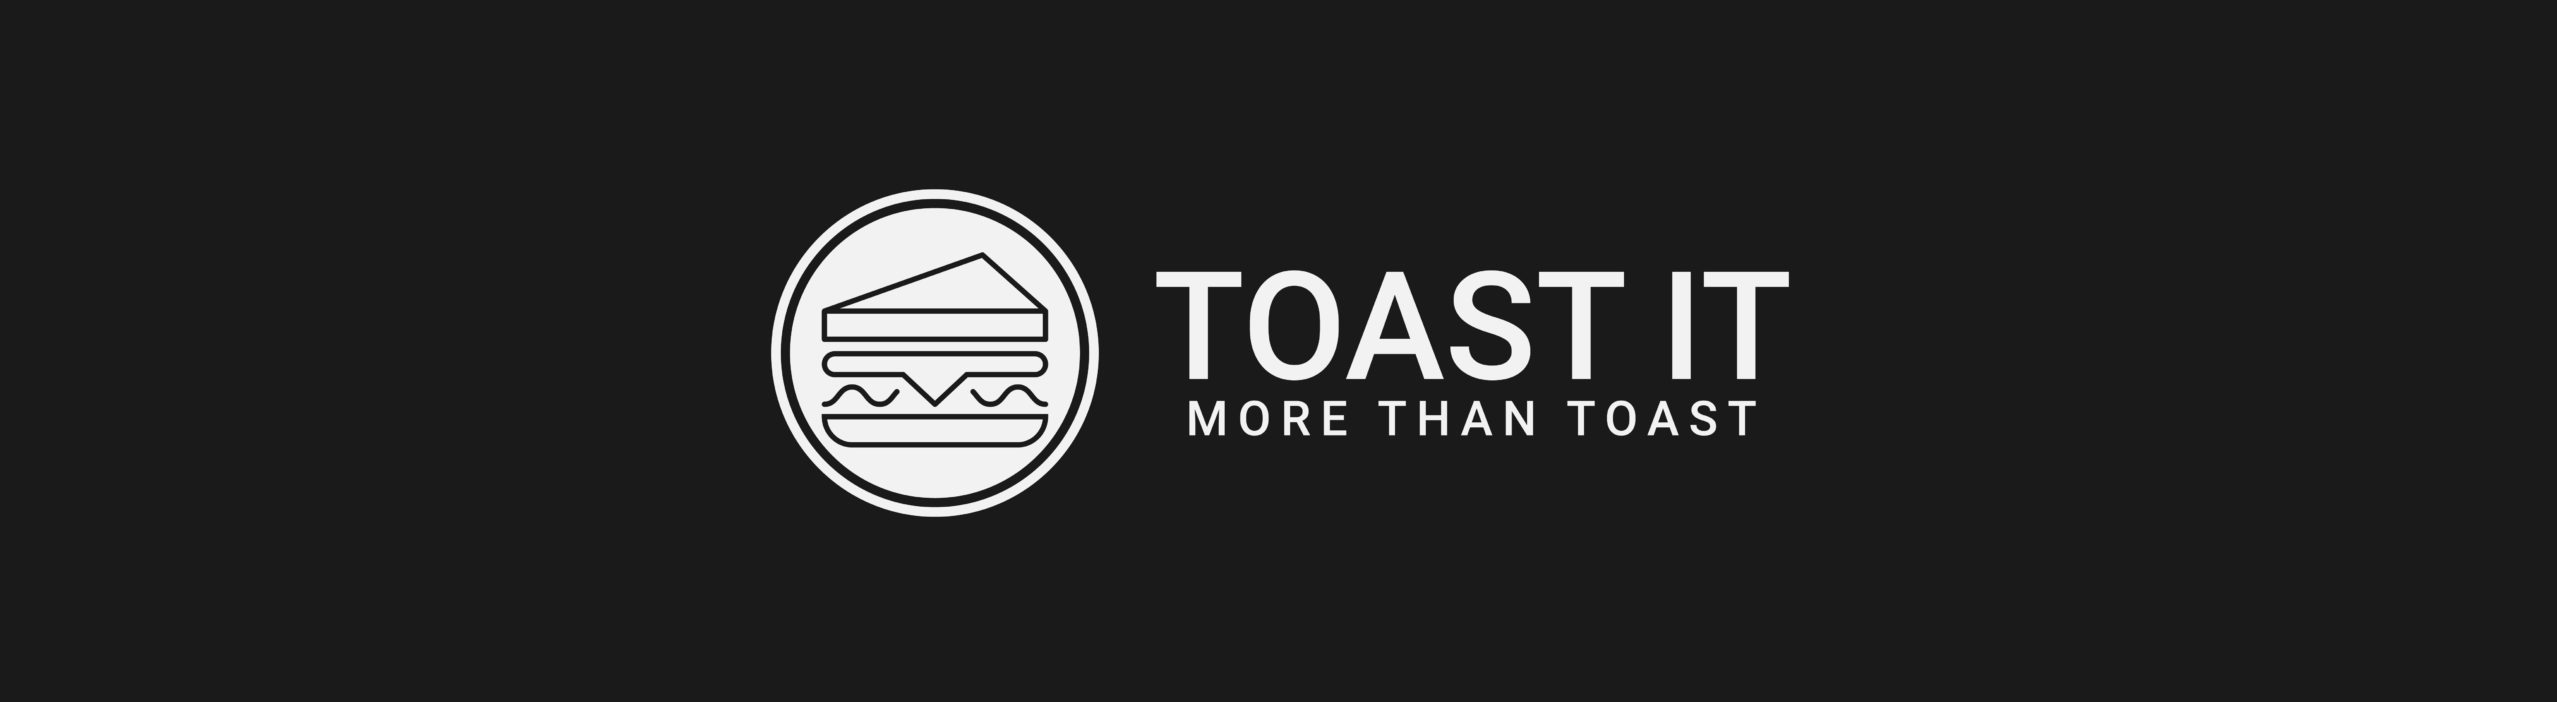 Toast it